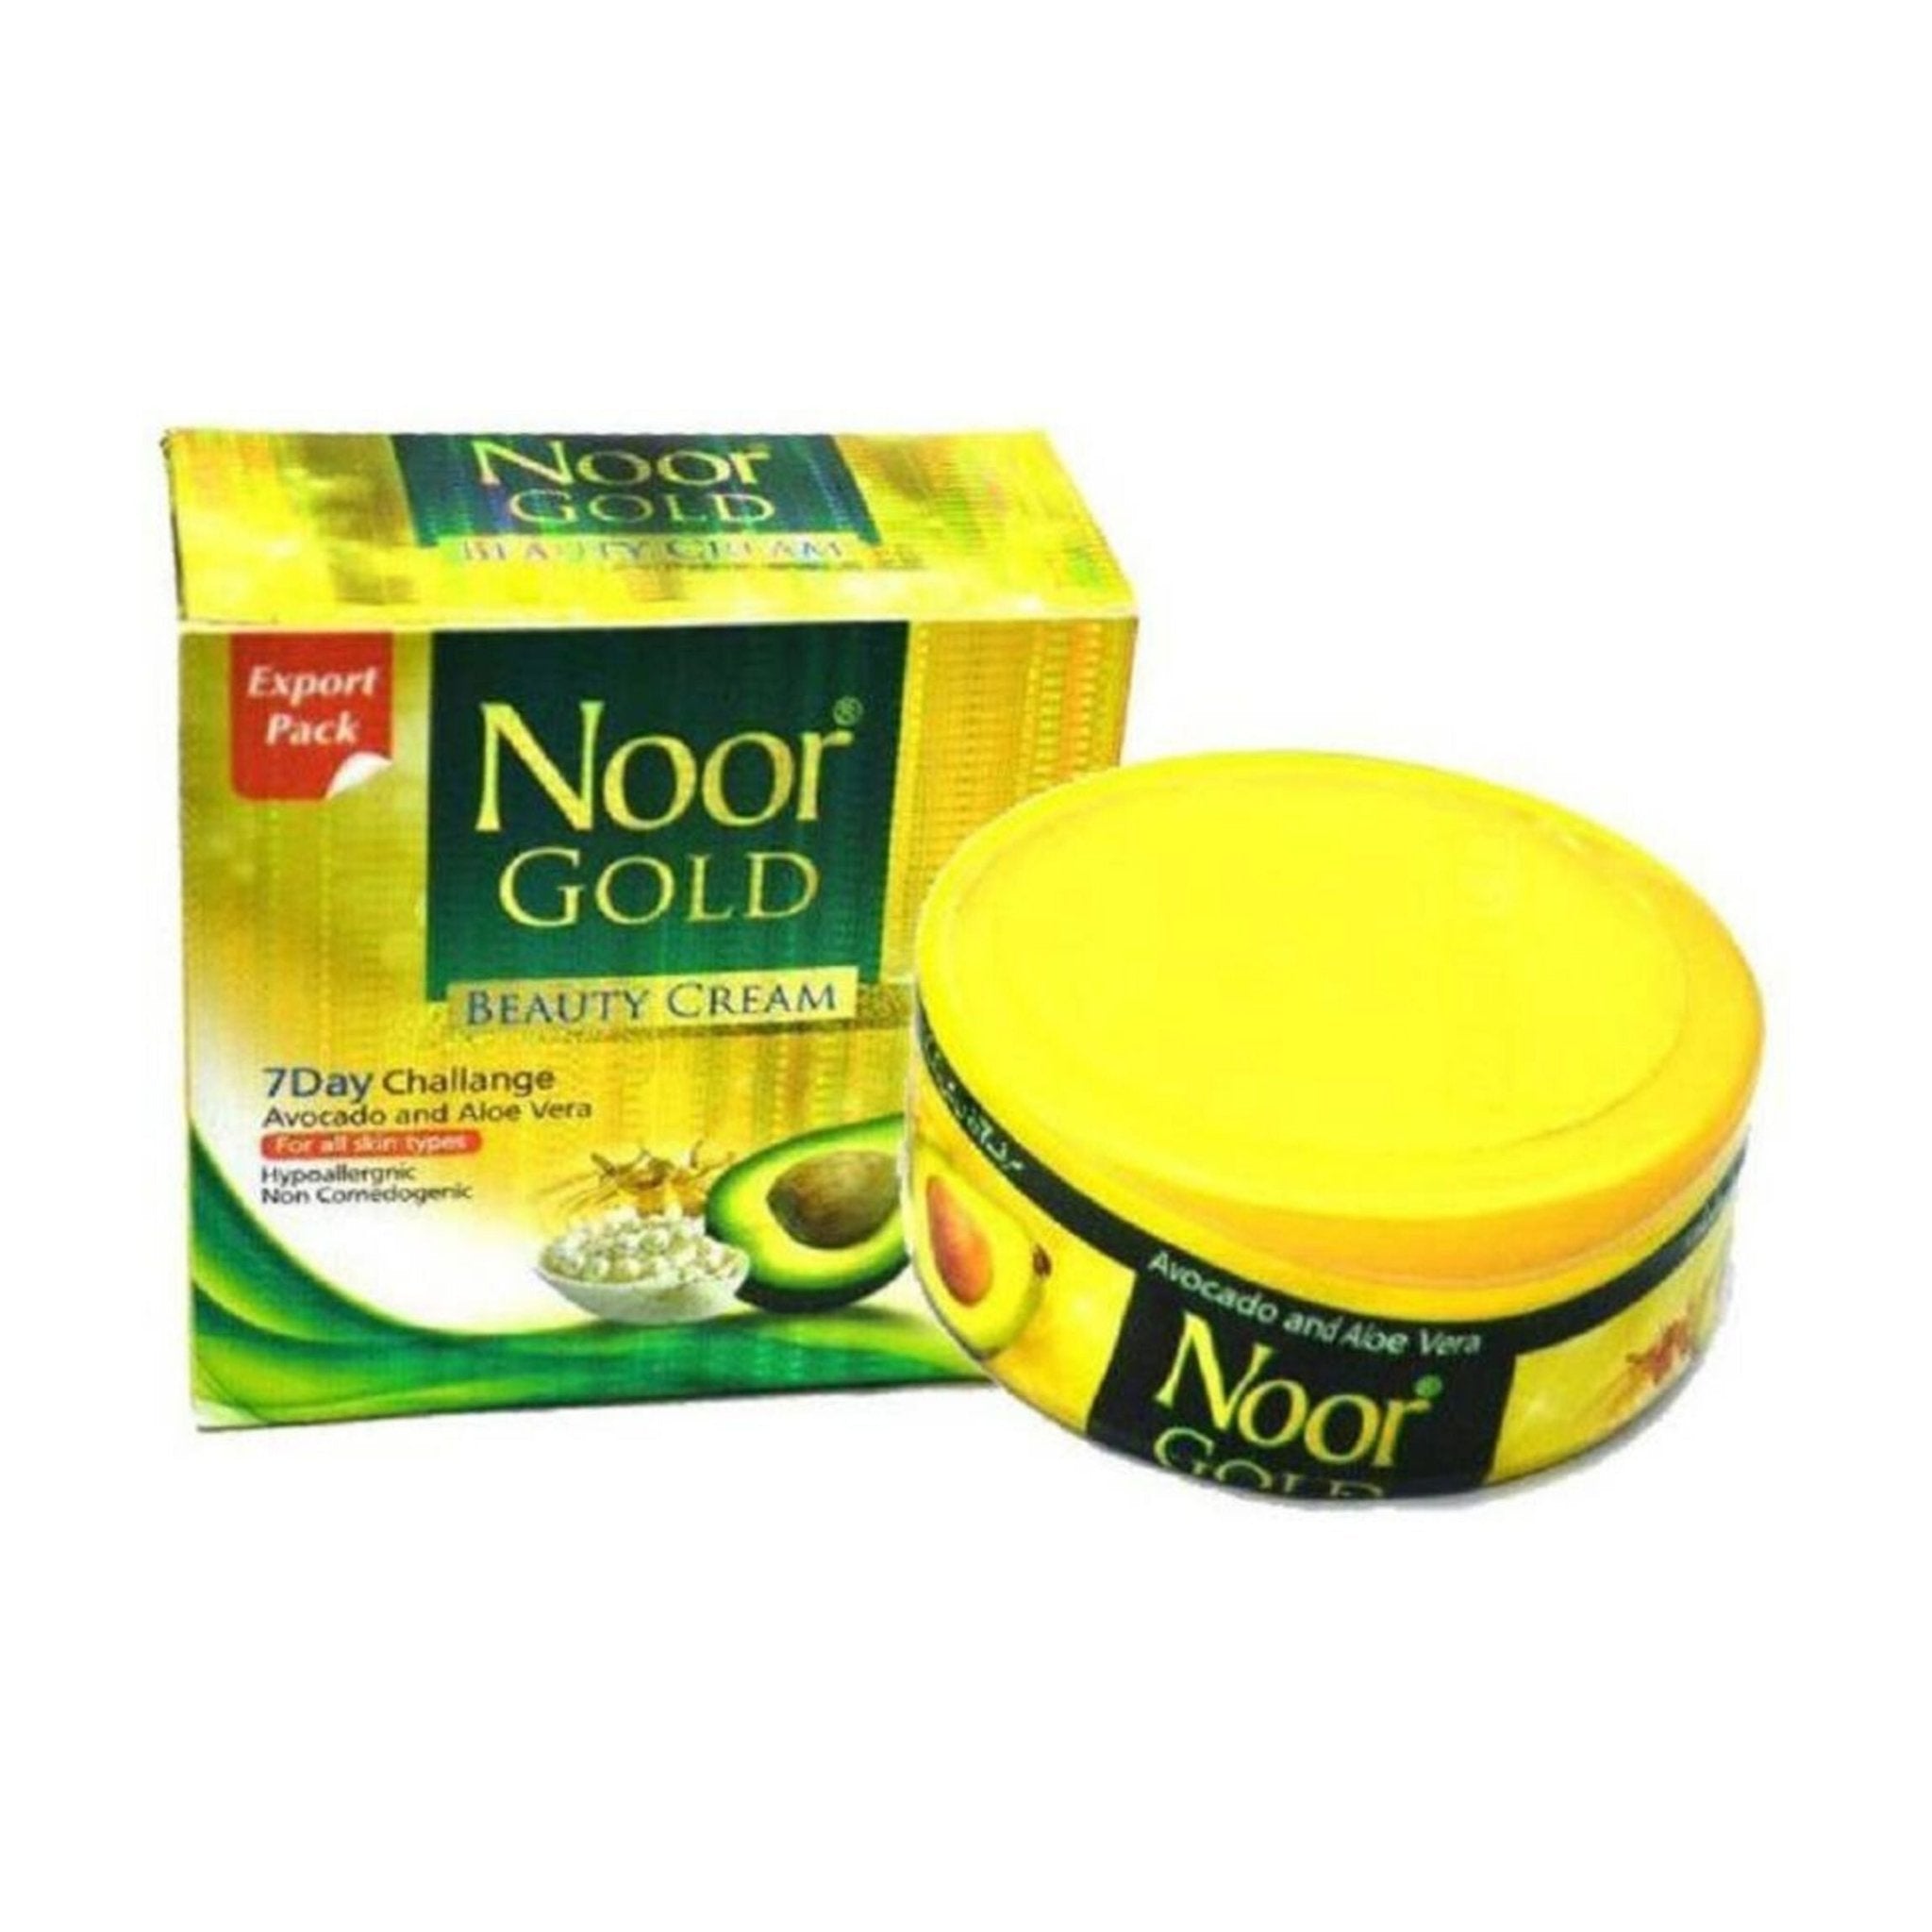 Noor Gold Beauty Cream With Avocado and Aloe Vera 7Day Challenge